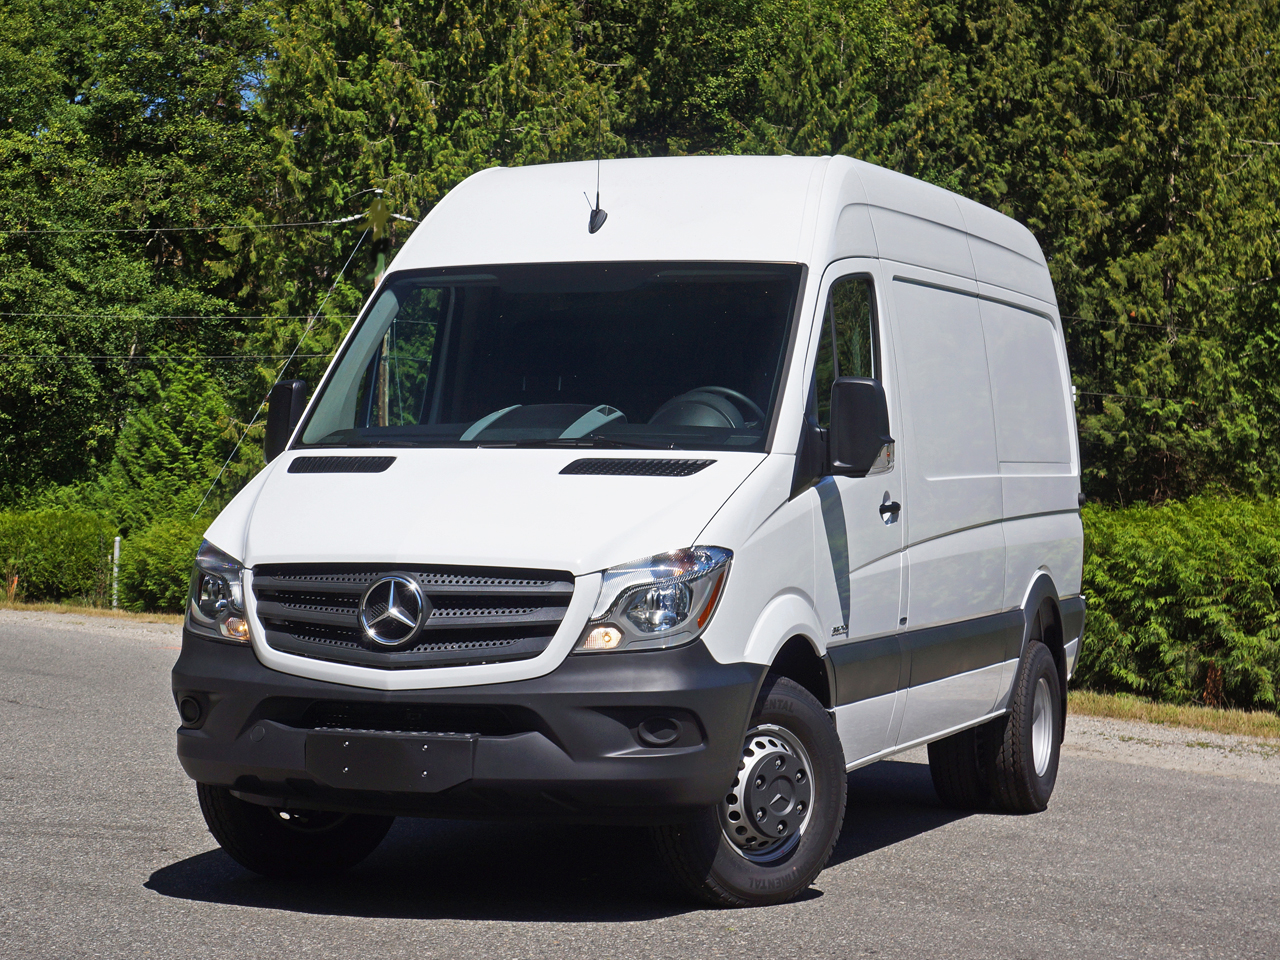 2016 Mercedes Benz Sprinter 3500 Cargo Van Road Test Review